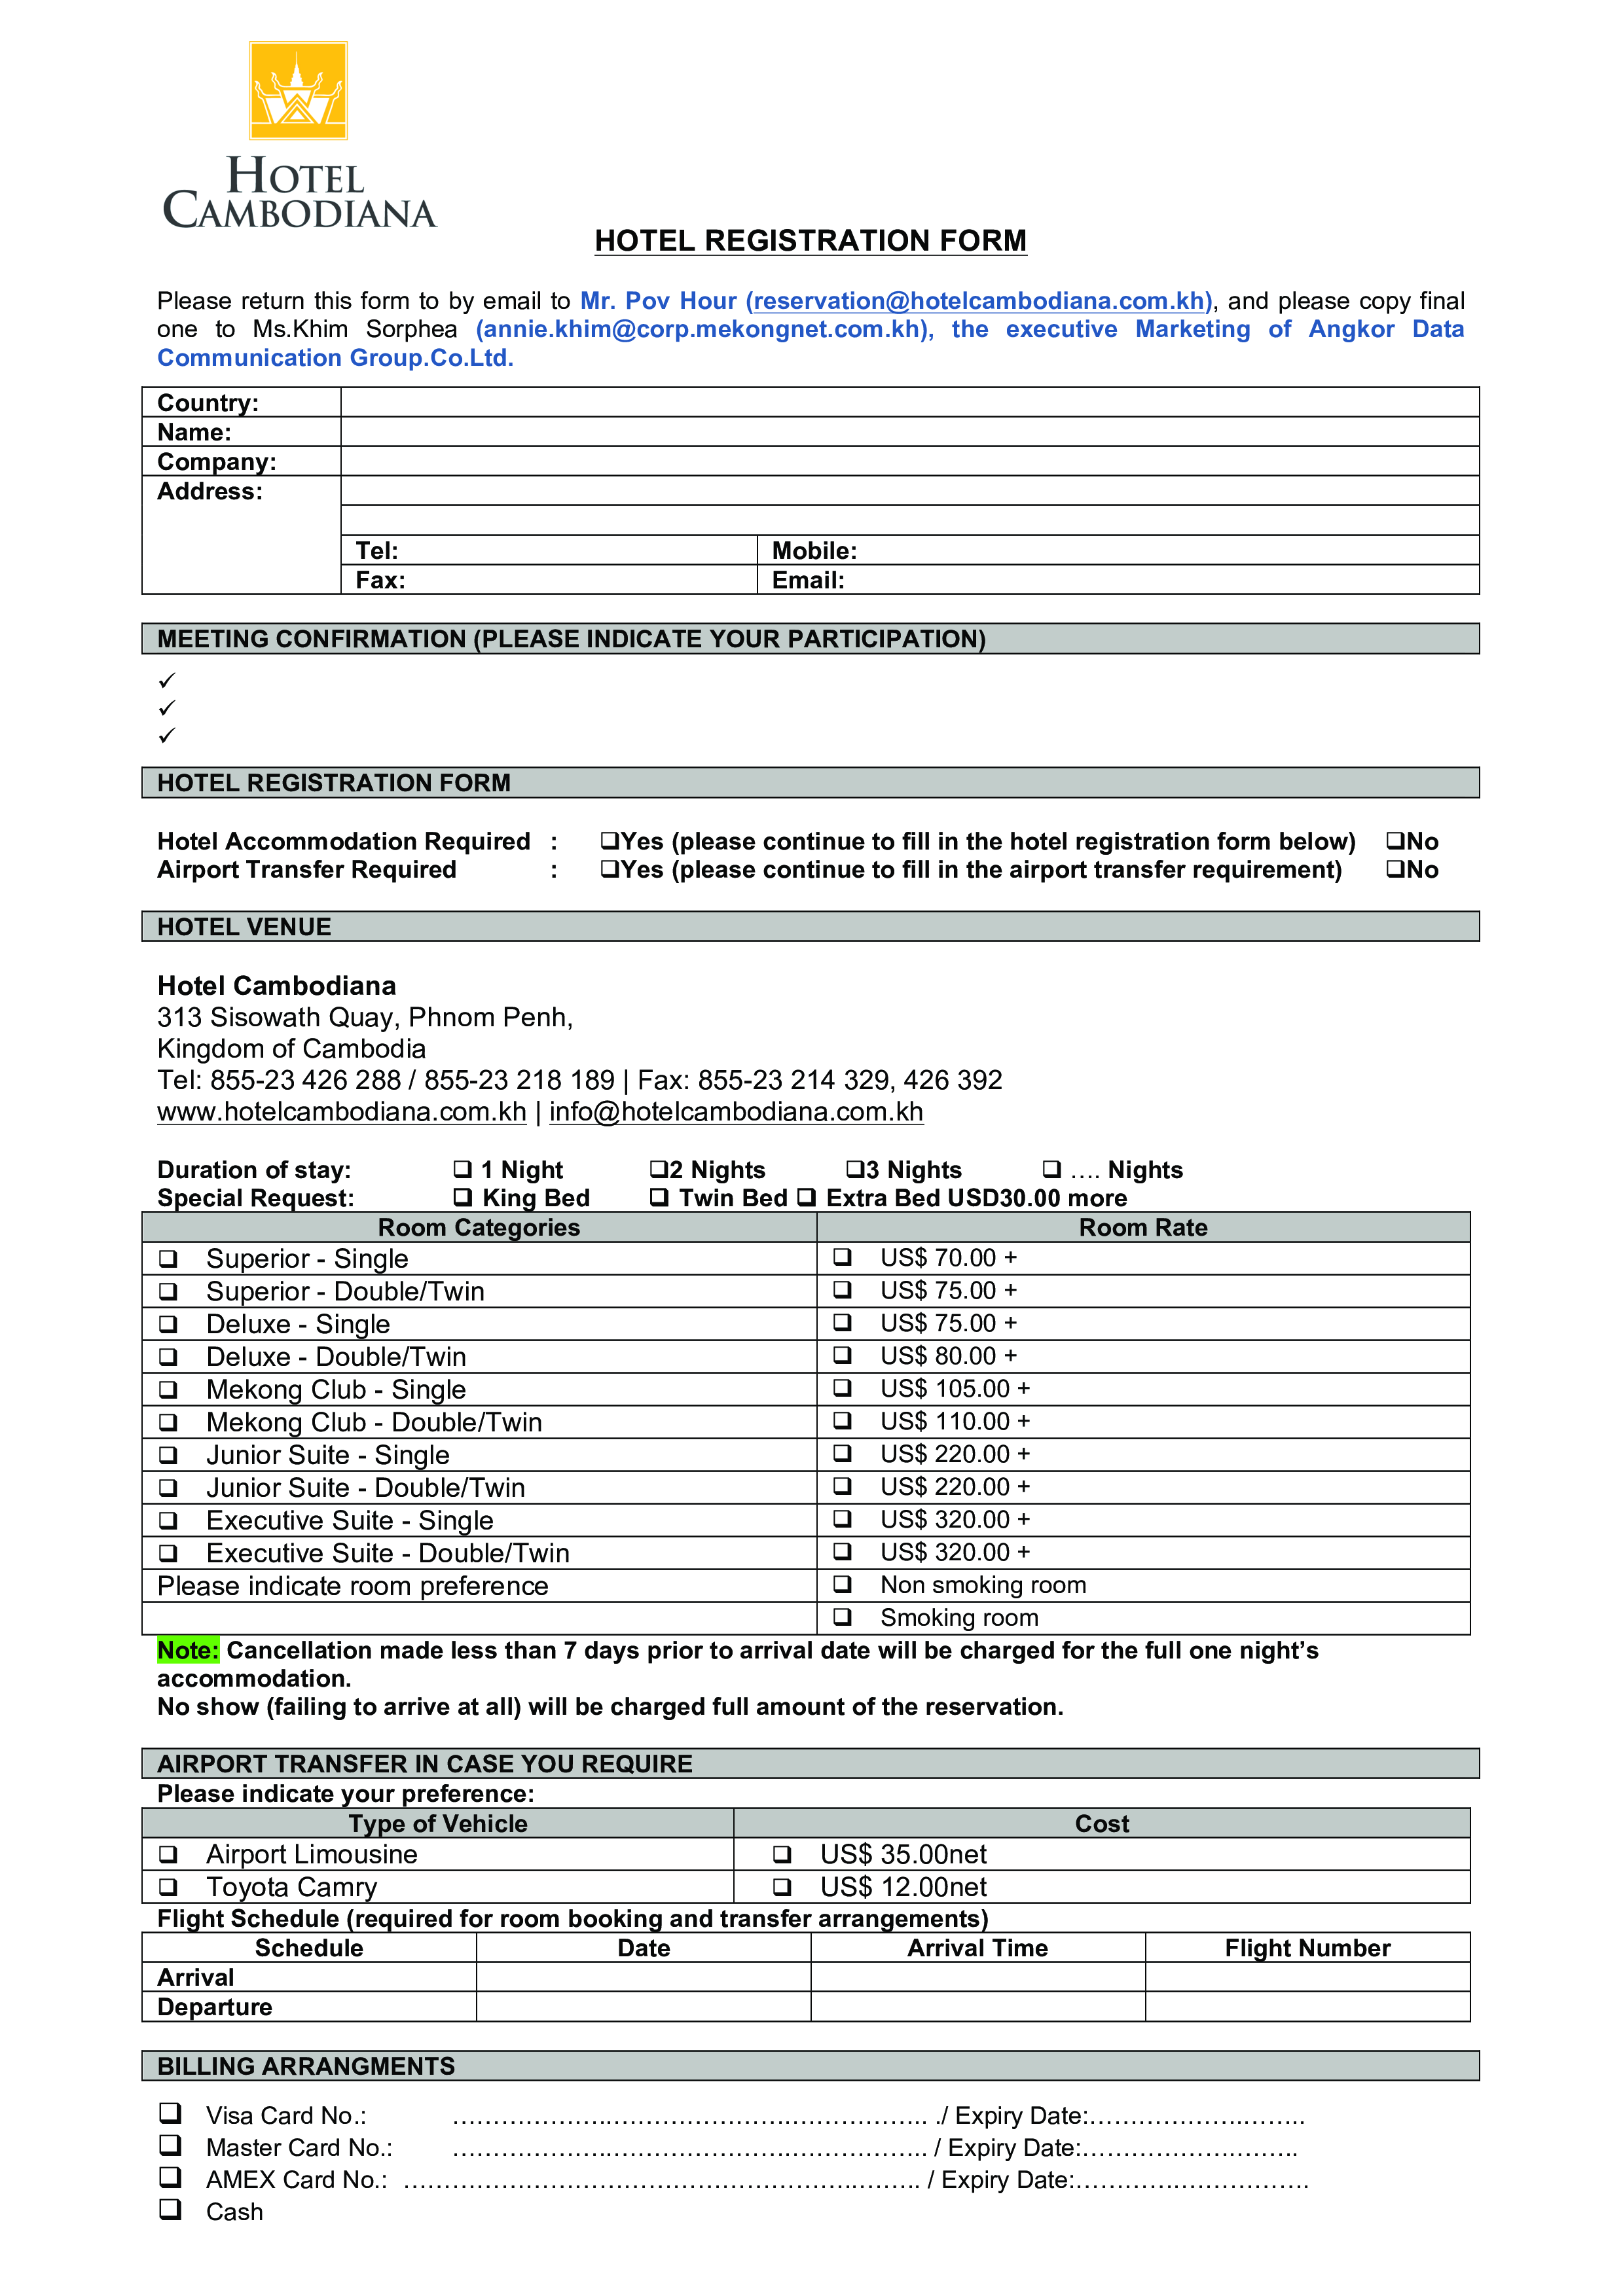 Printable Hotel Registration Form | Templates at allbusinesstemplates.com